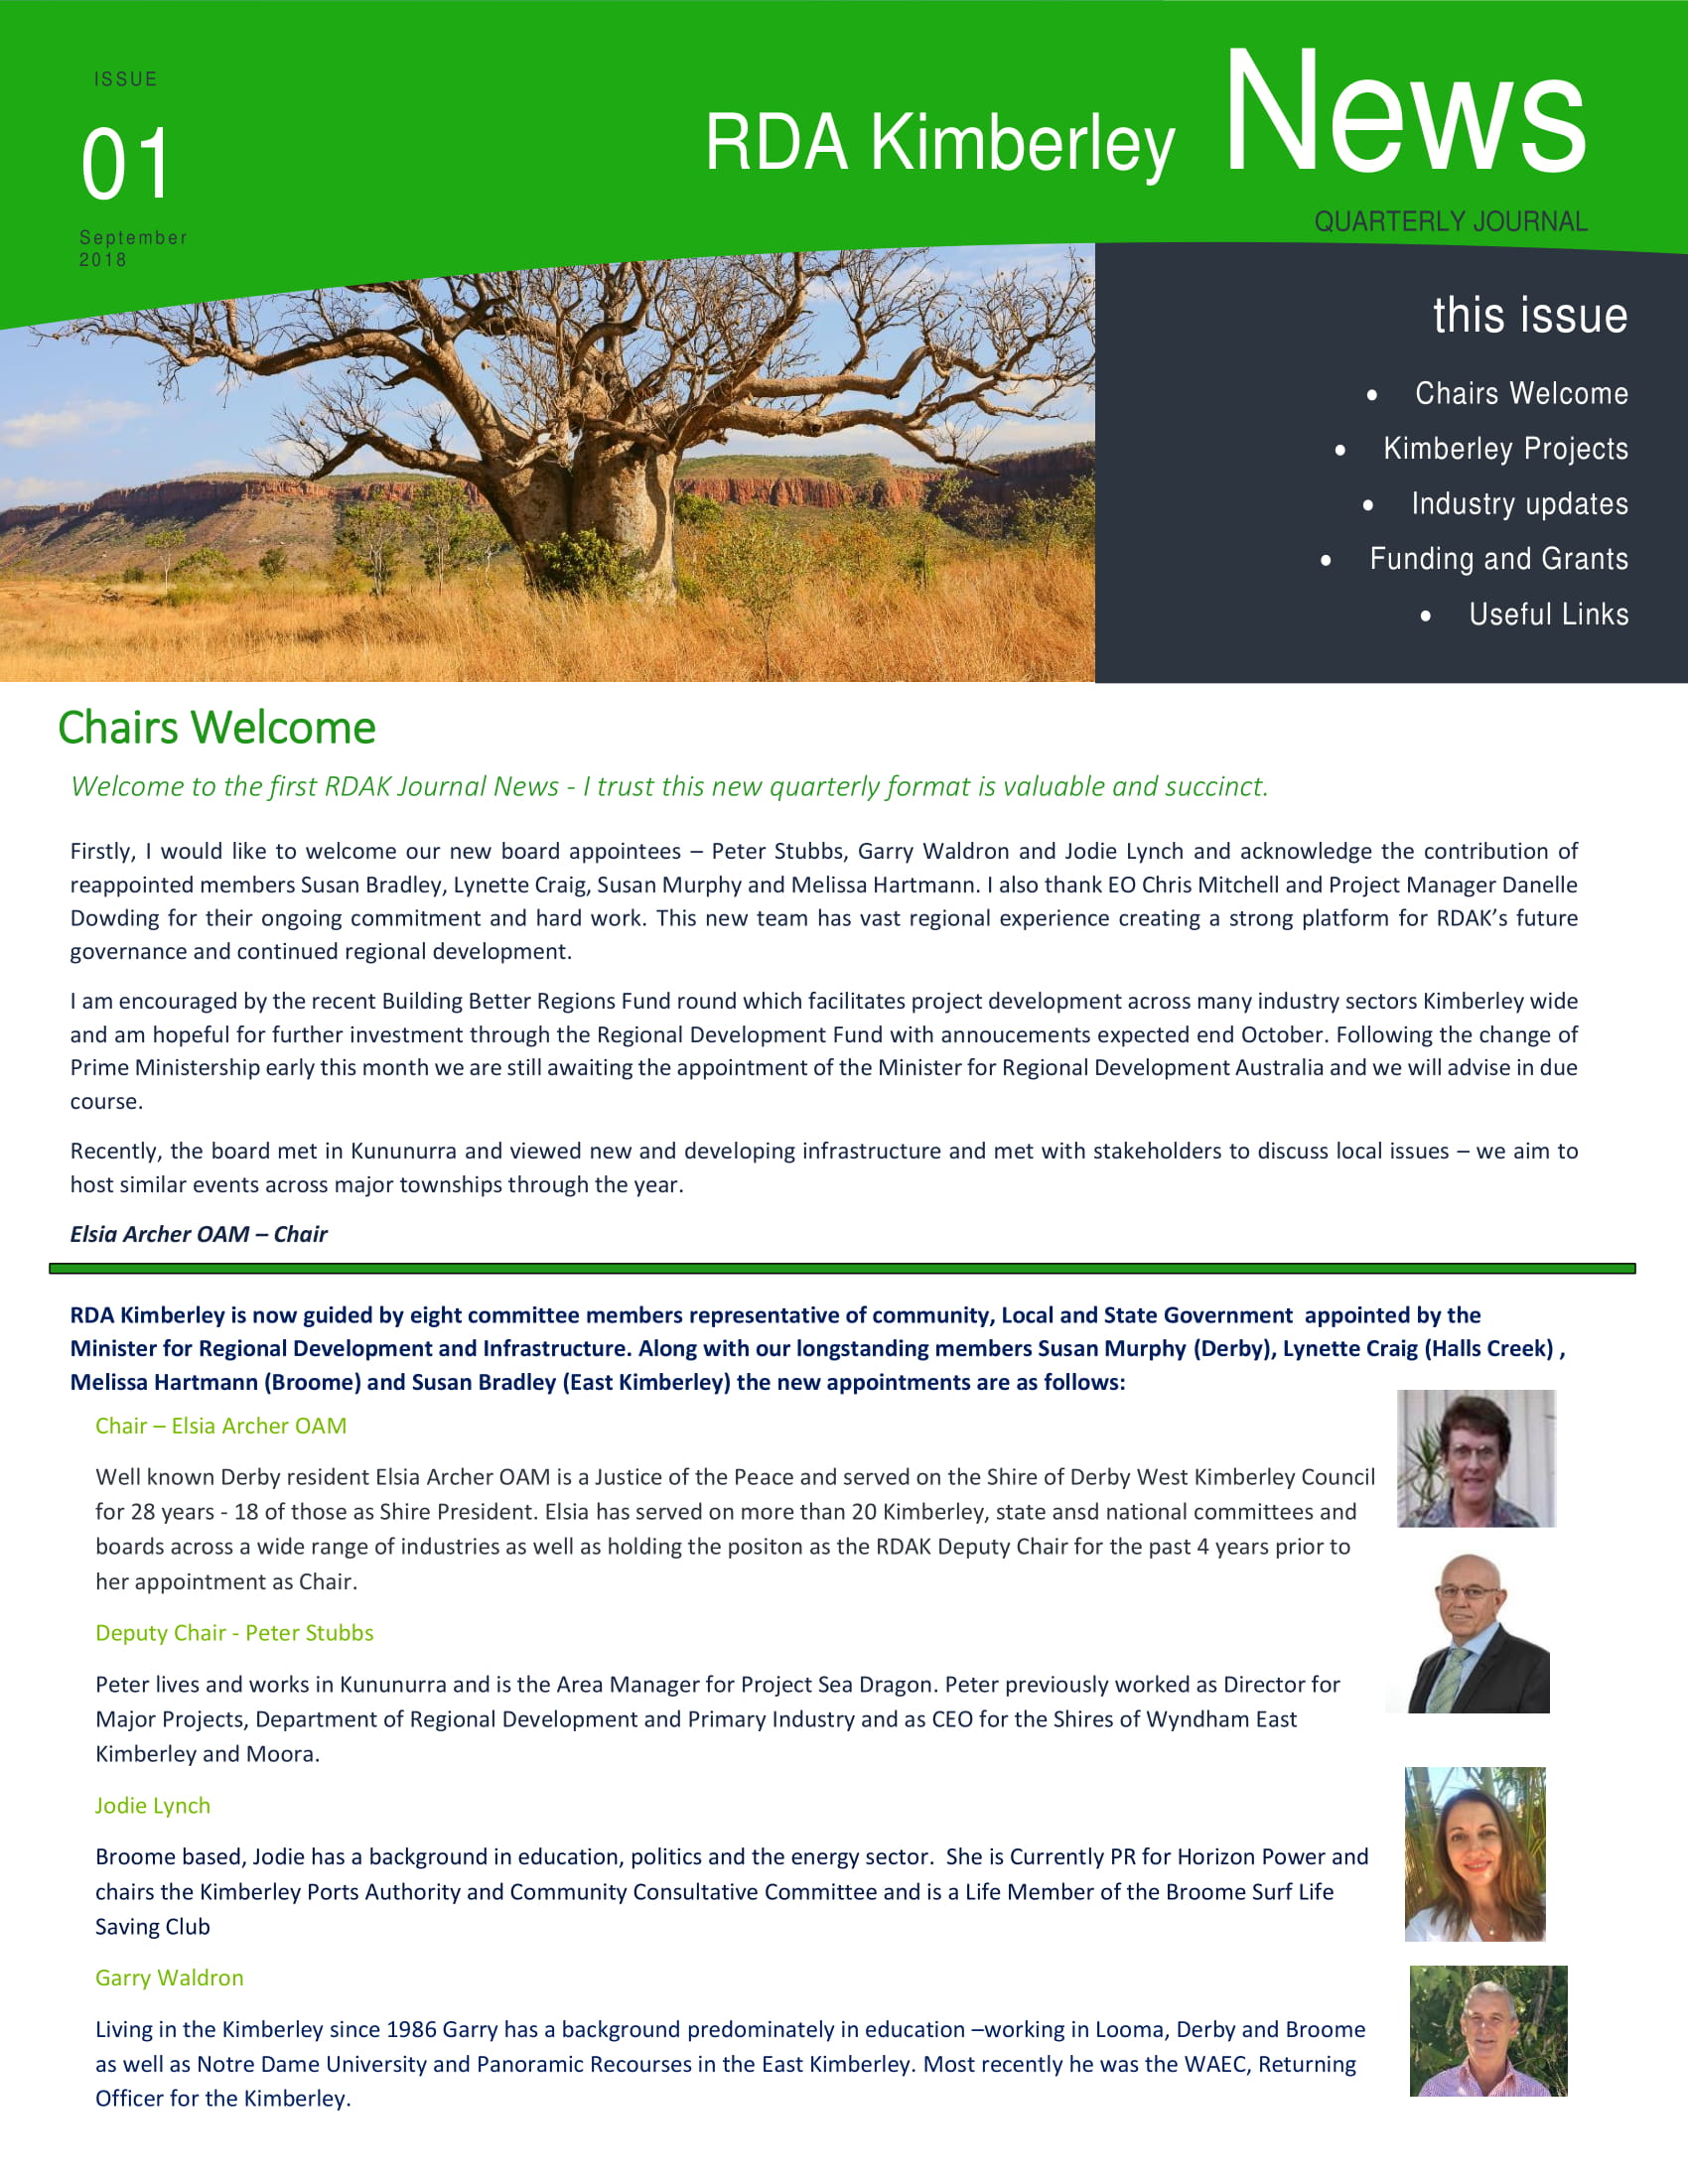 RDA-Kimberley-Quarterly-News-Journal-Edition-1-September-2018-Page1